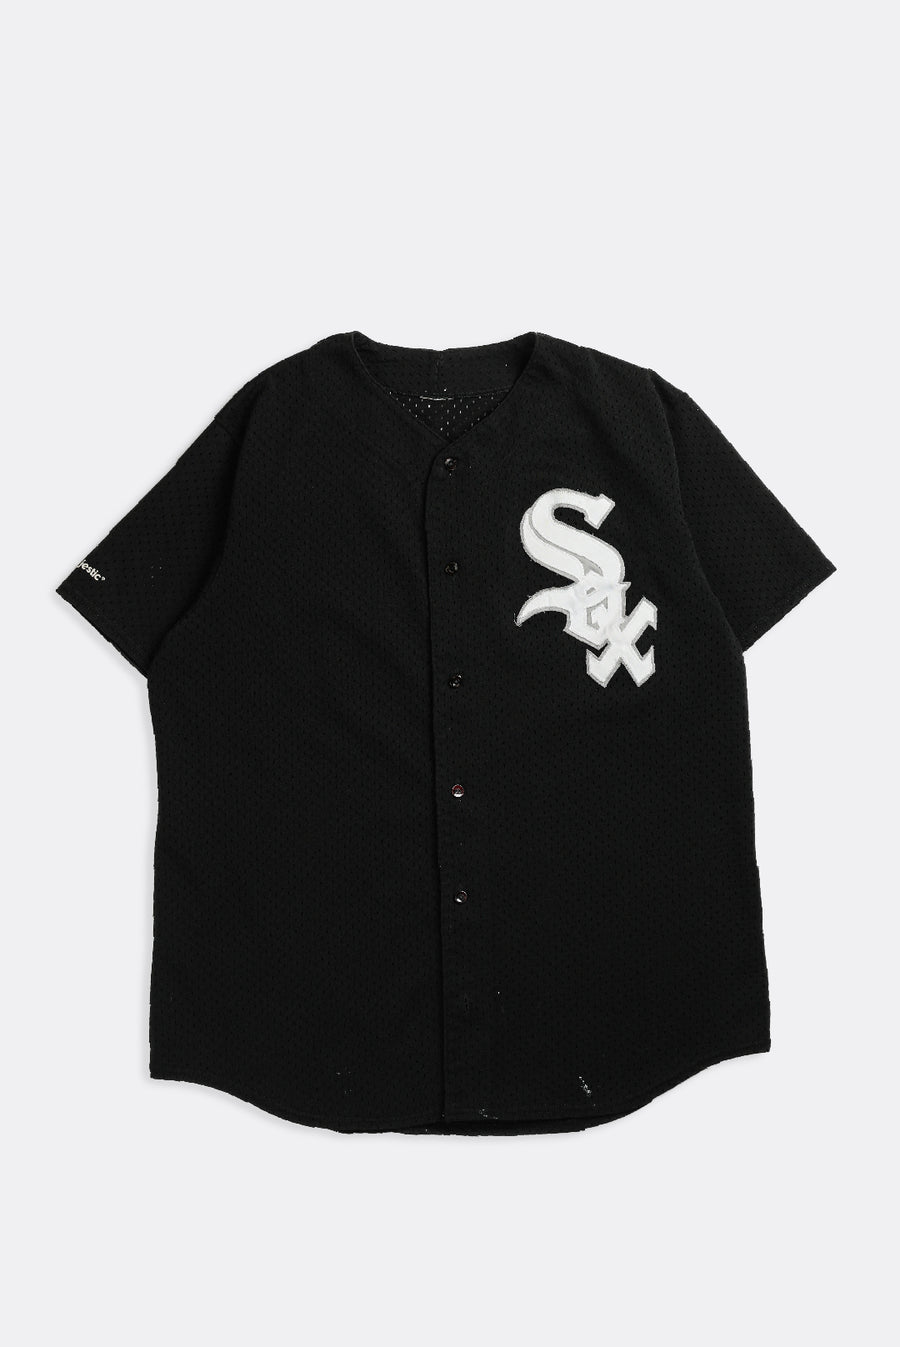 Vintage White Sox Baseball Jersey